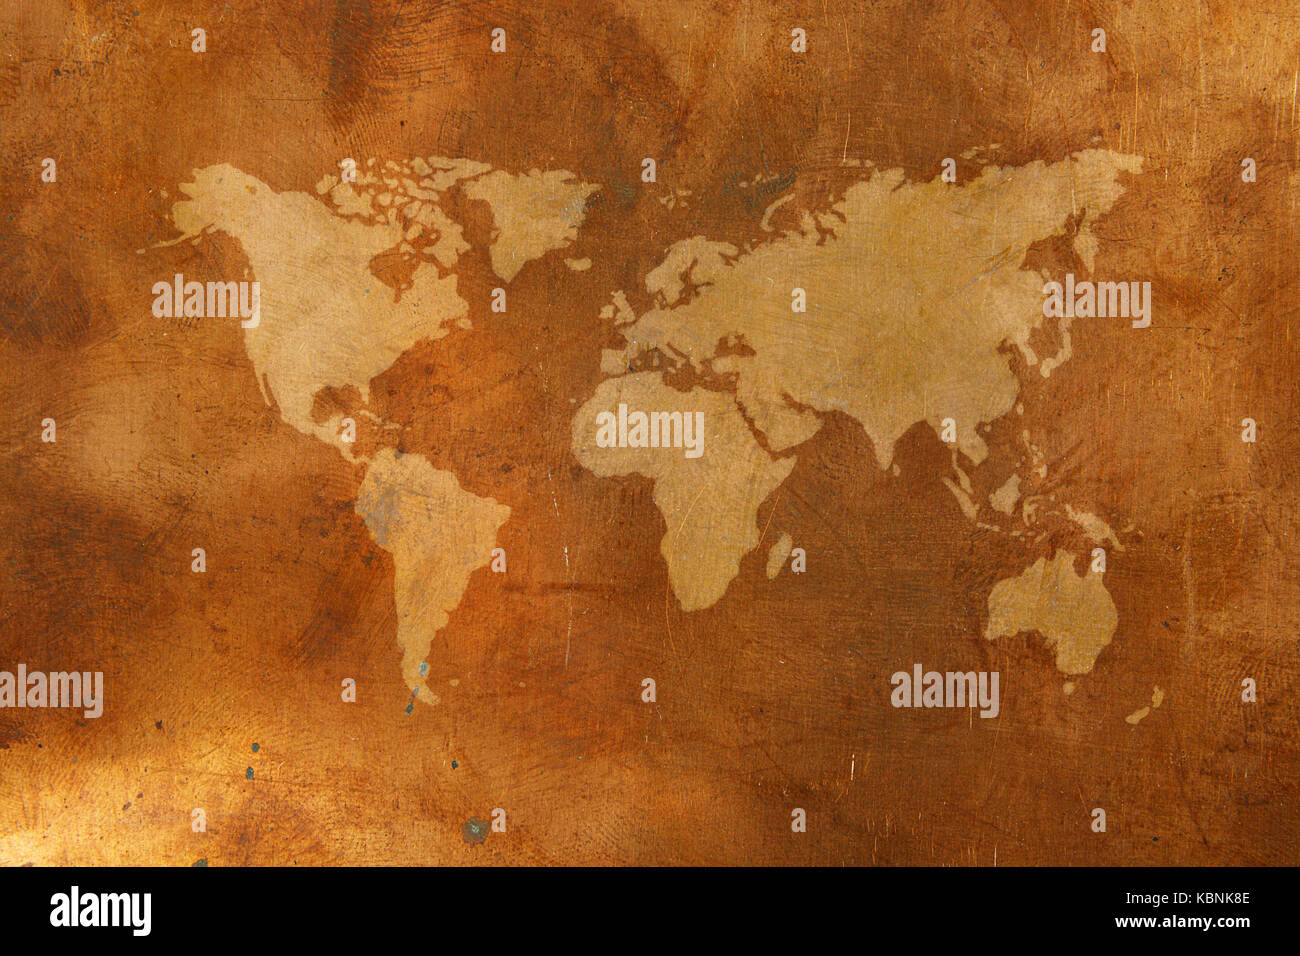 World map on bronze background Stock Photo